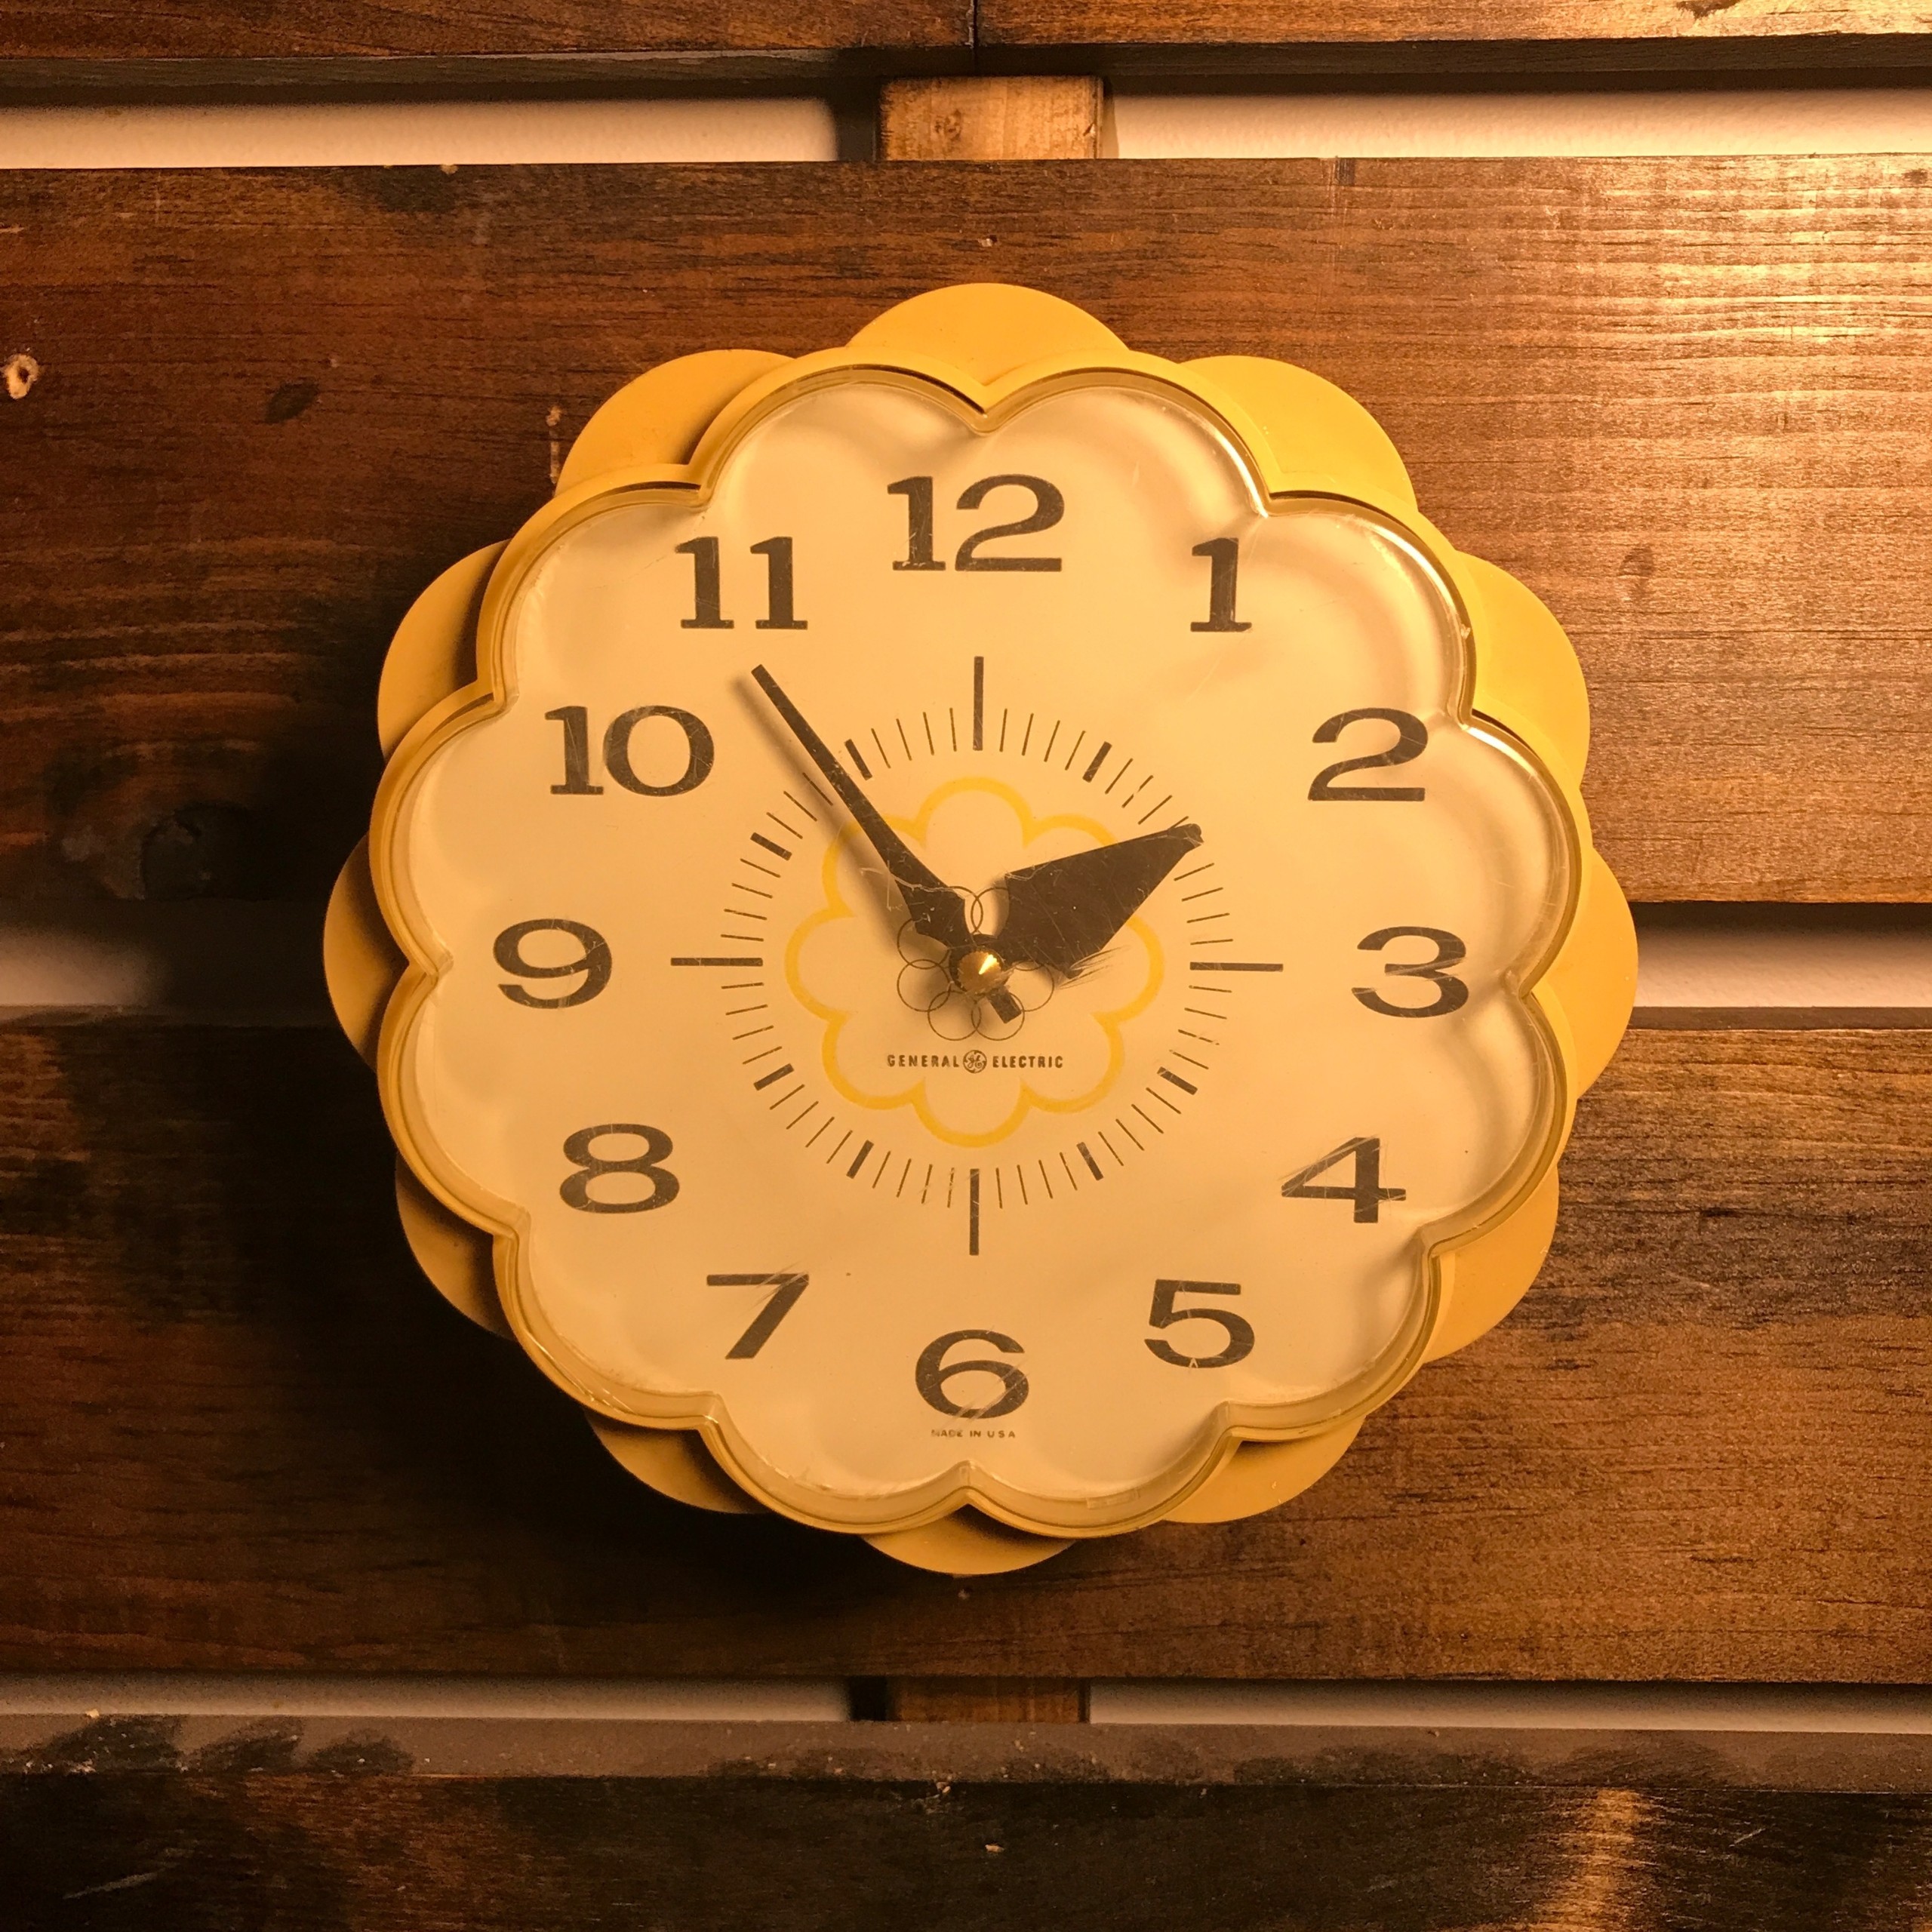 General electric mid century daisy wall clock usa